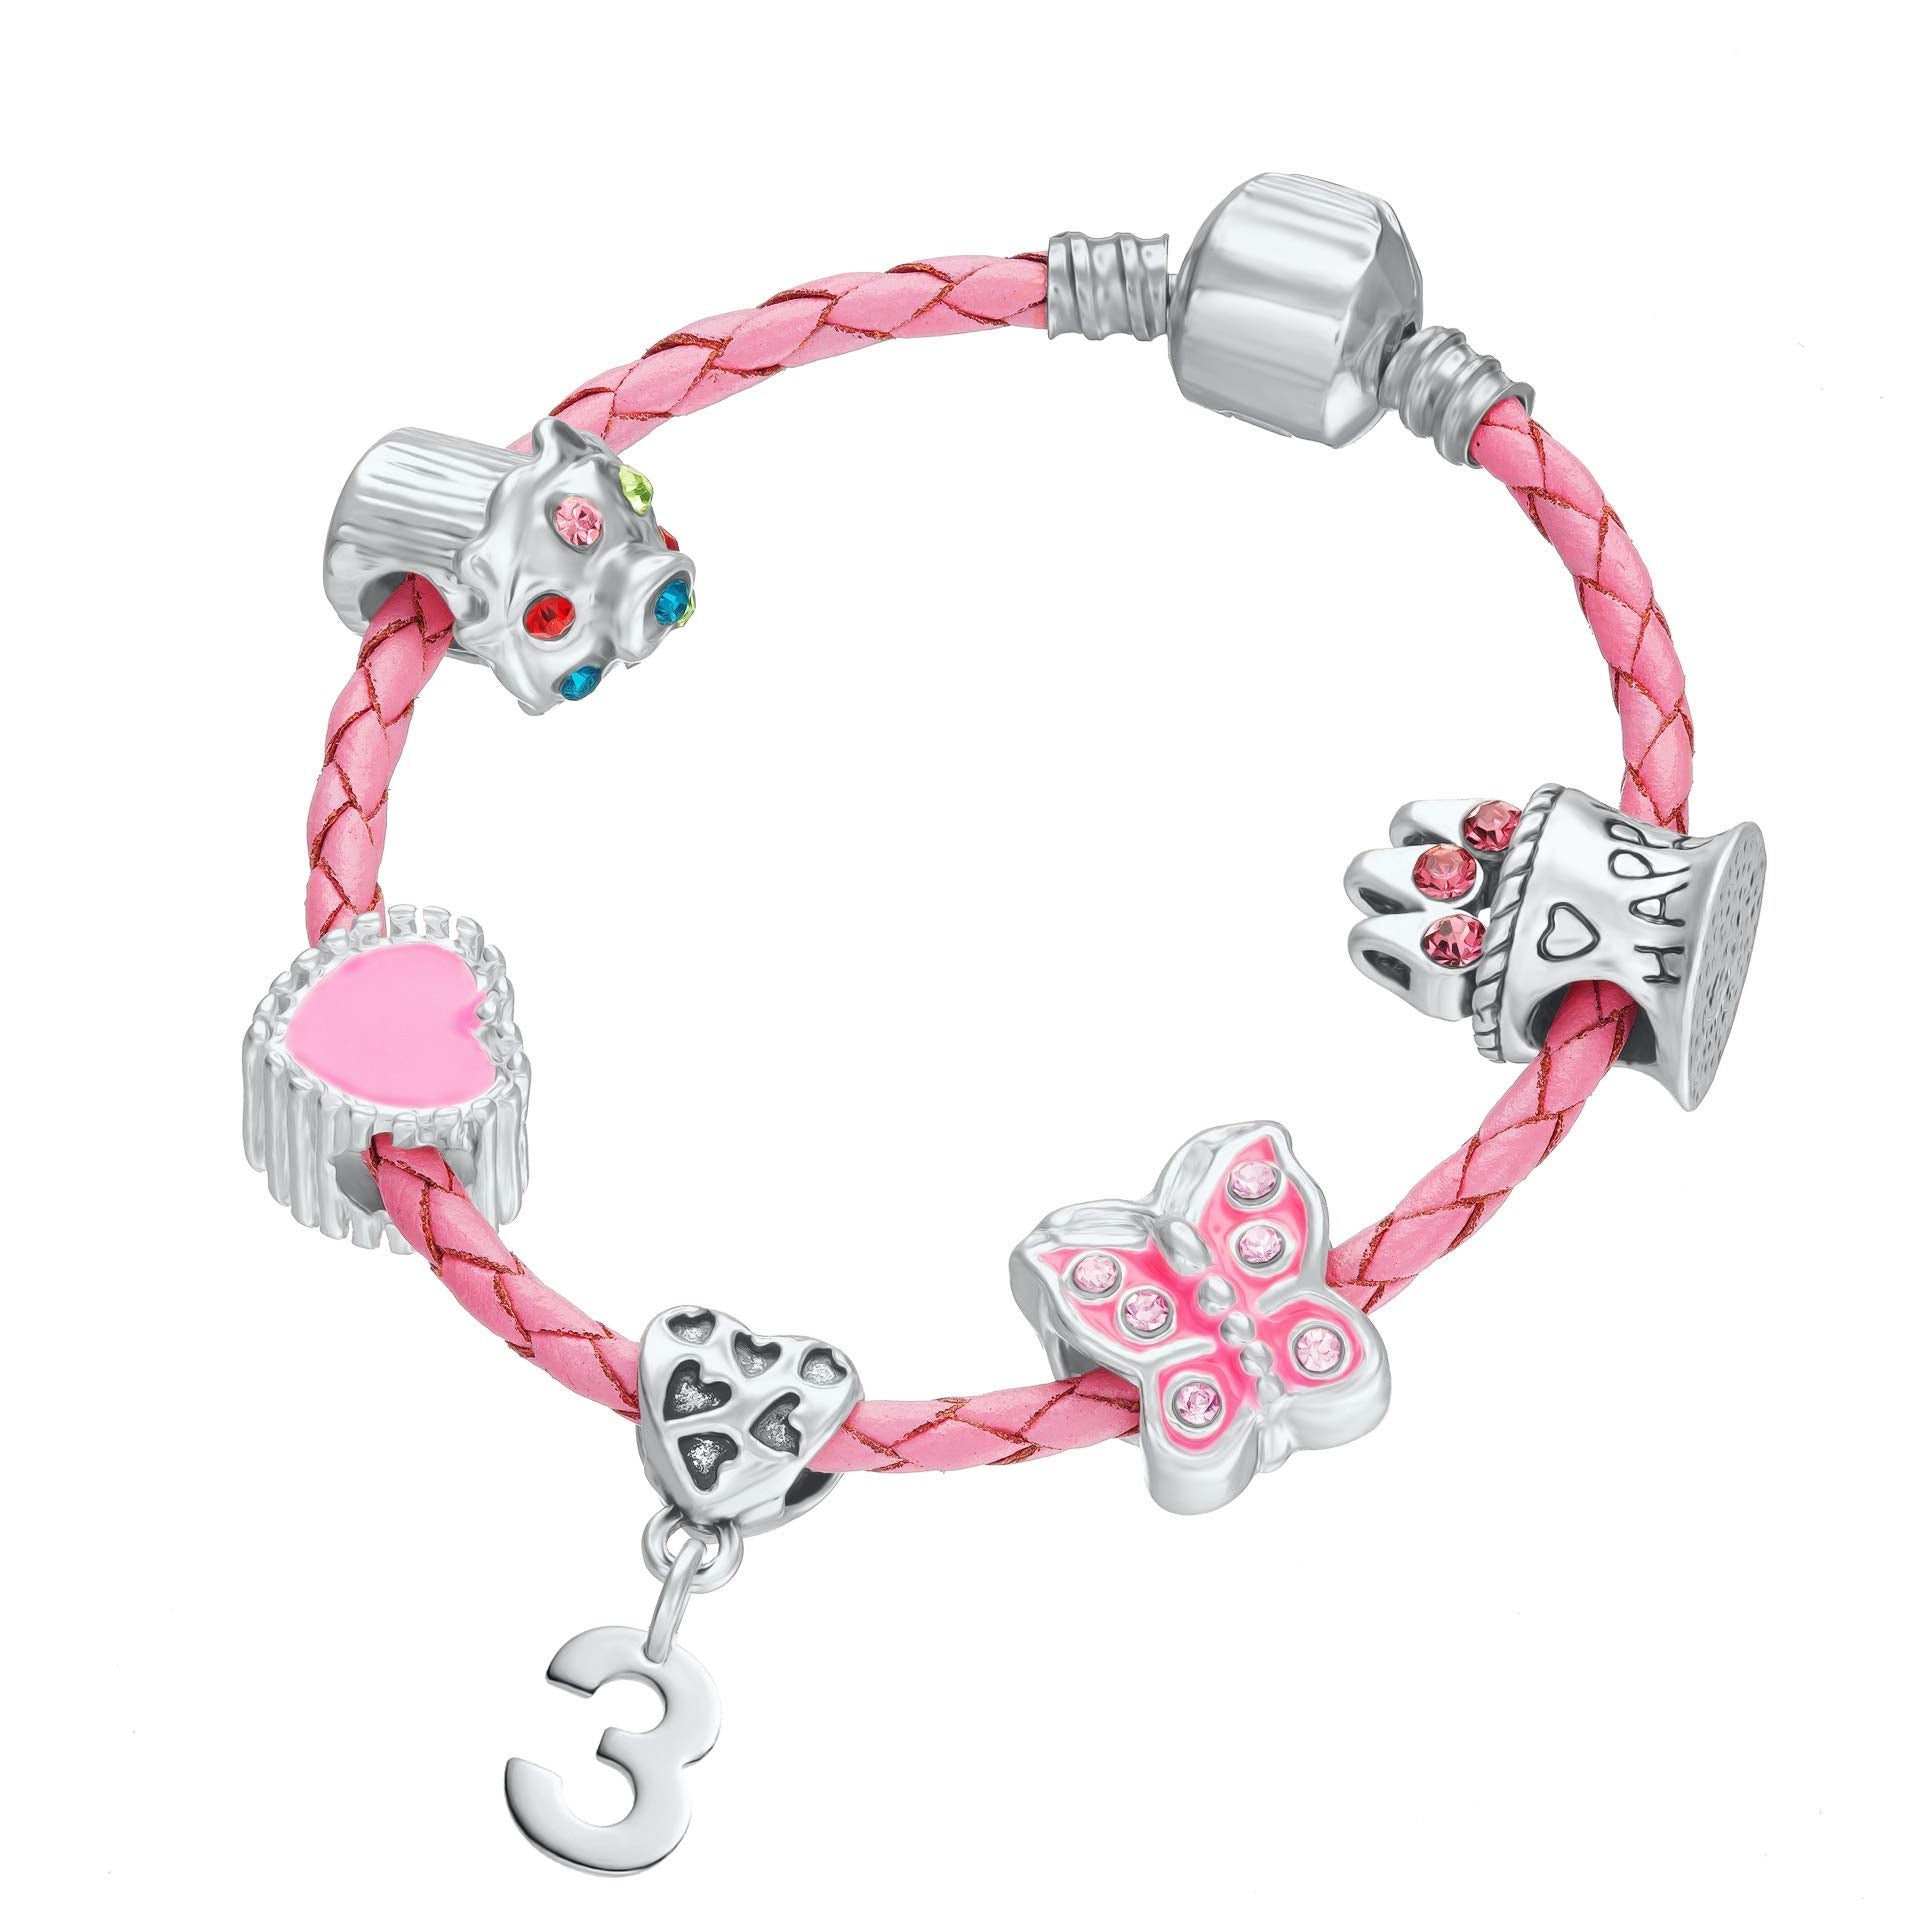 Children's Pink Leather Happy 3rd Birthday Charm Bracelet with Gift Box - Girl's & Children's Birthday Gift Jewellery